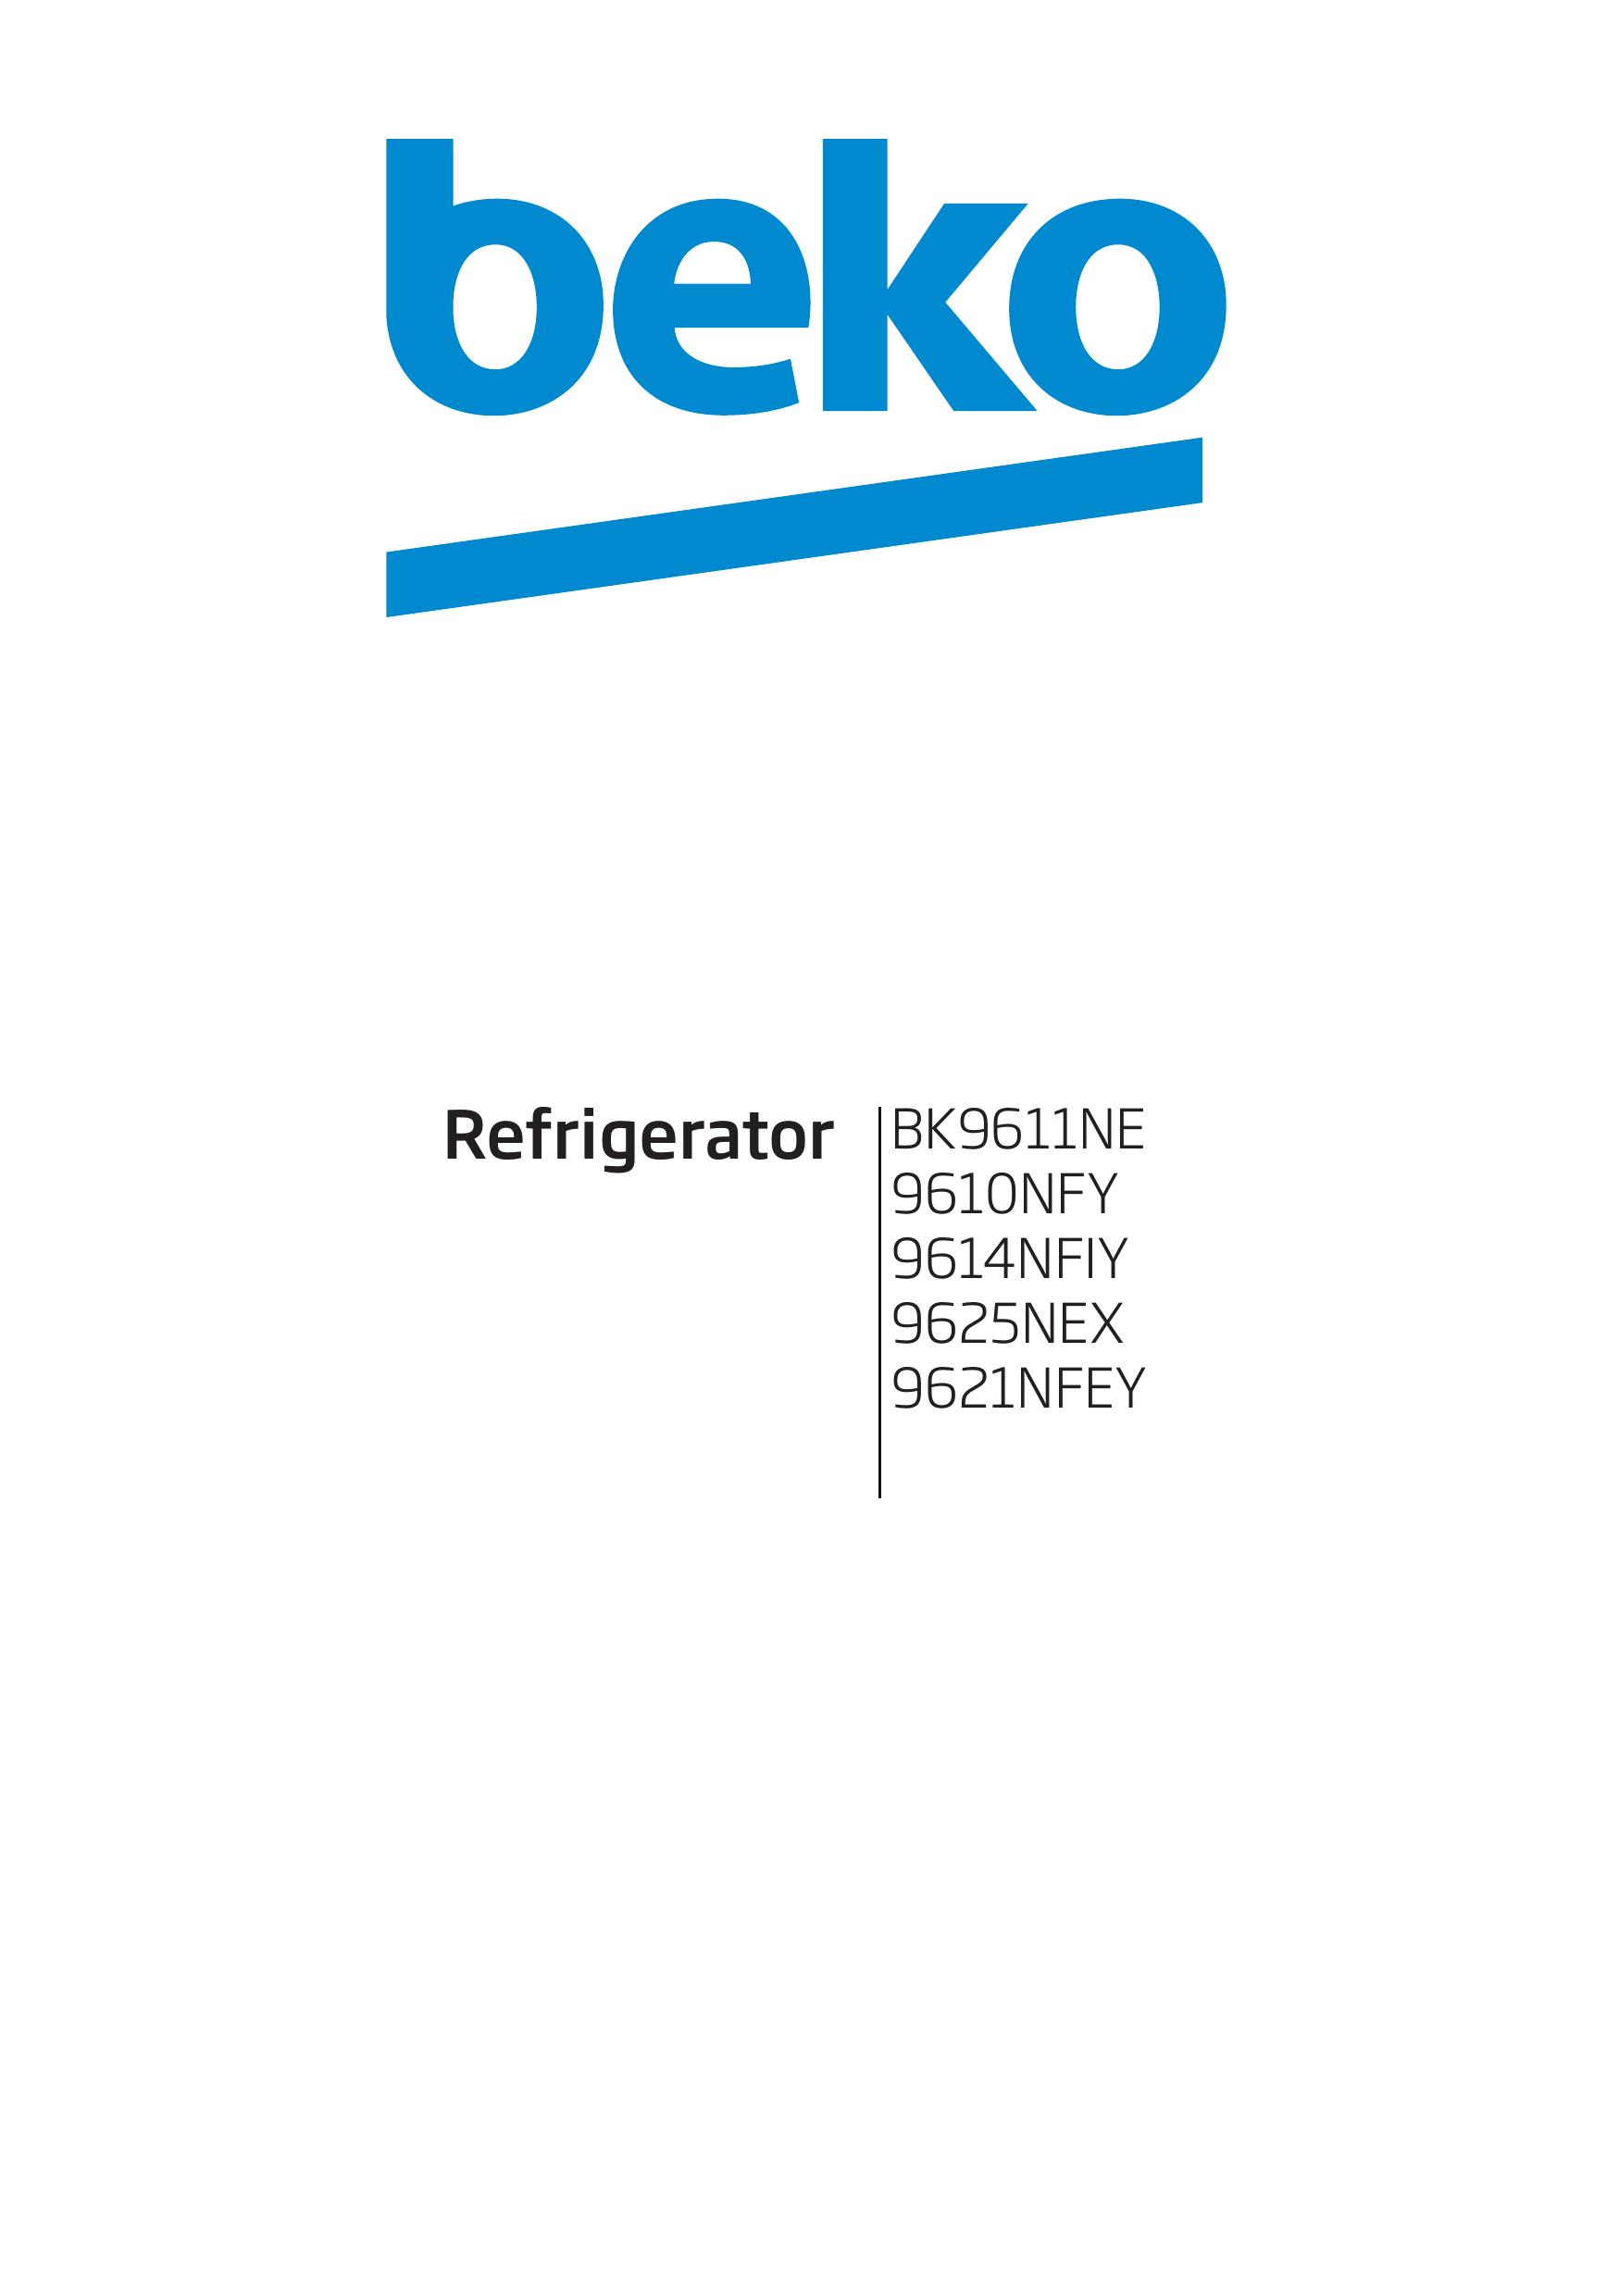 Beko 9625NEX Refrigerator User Manual